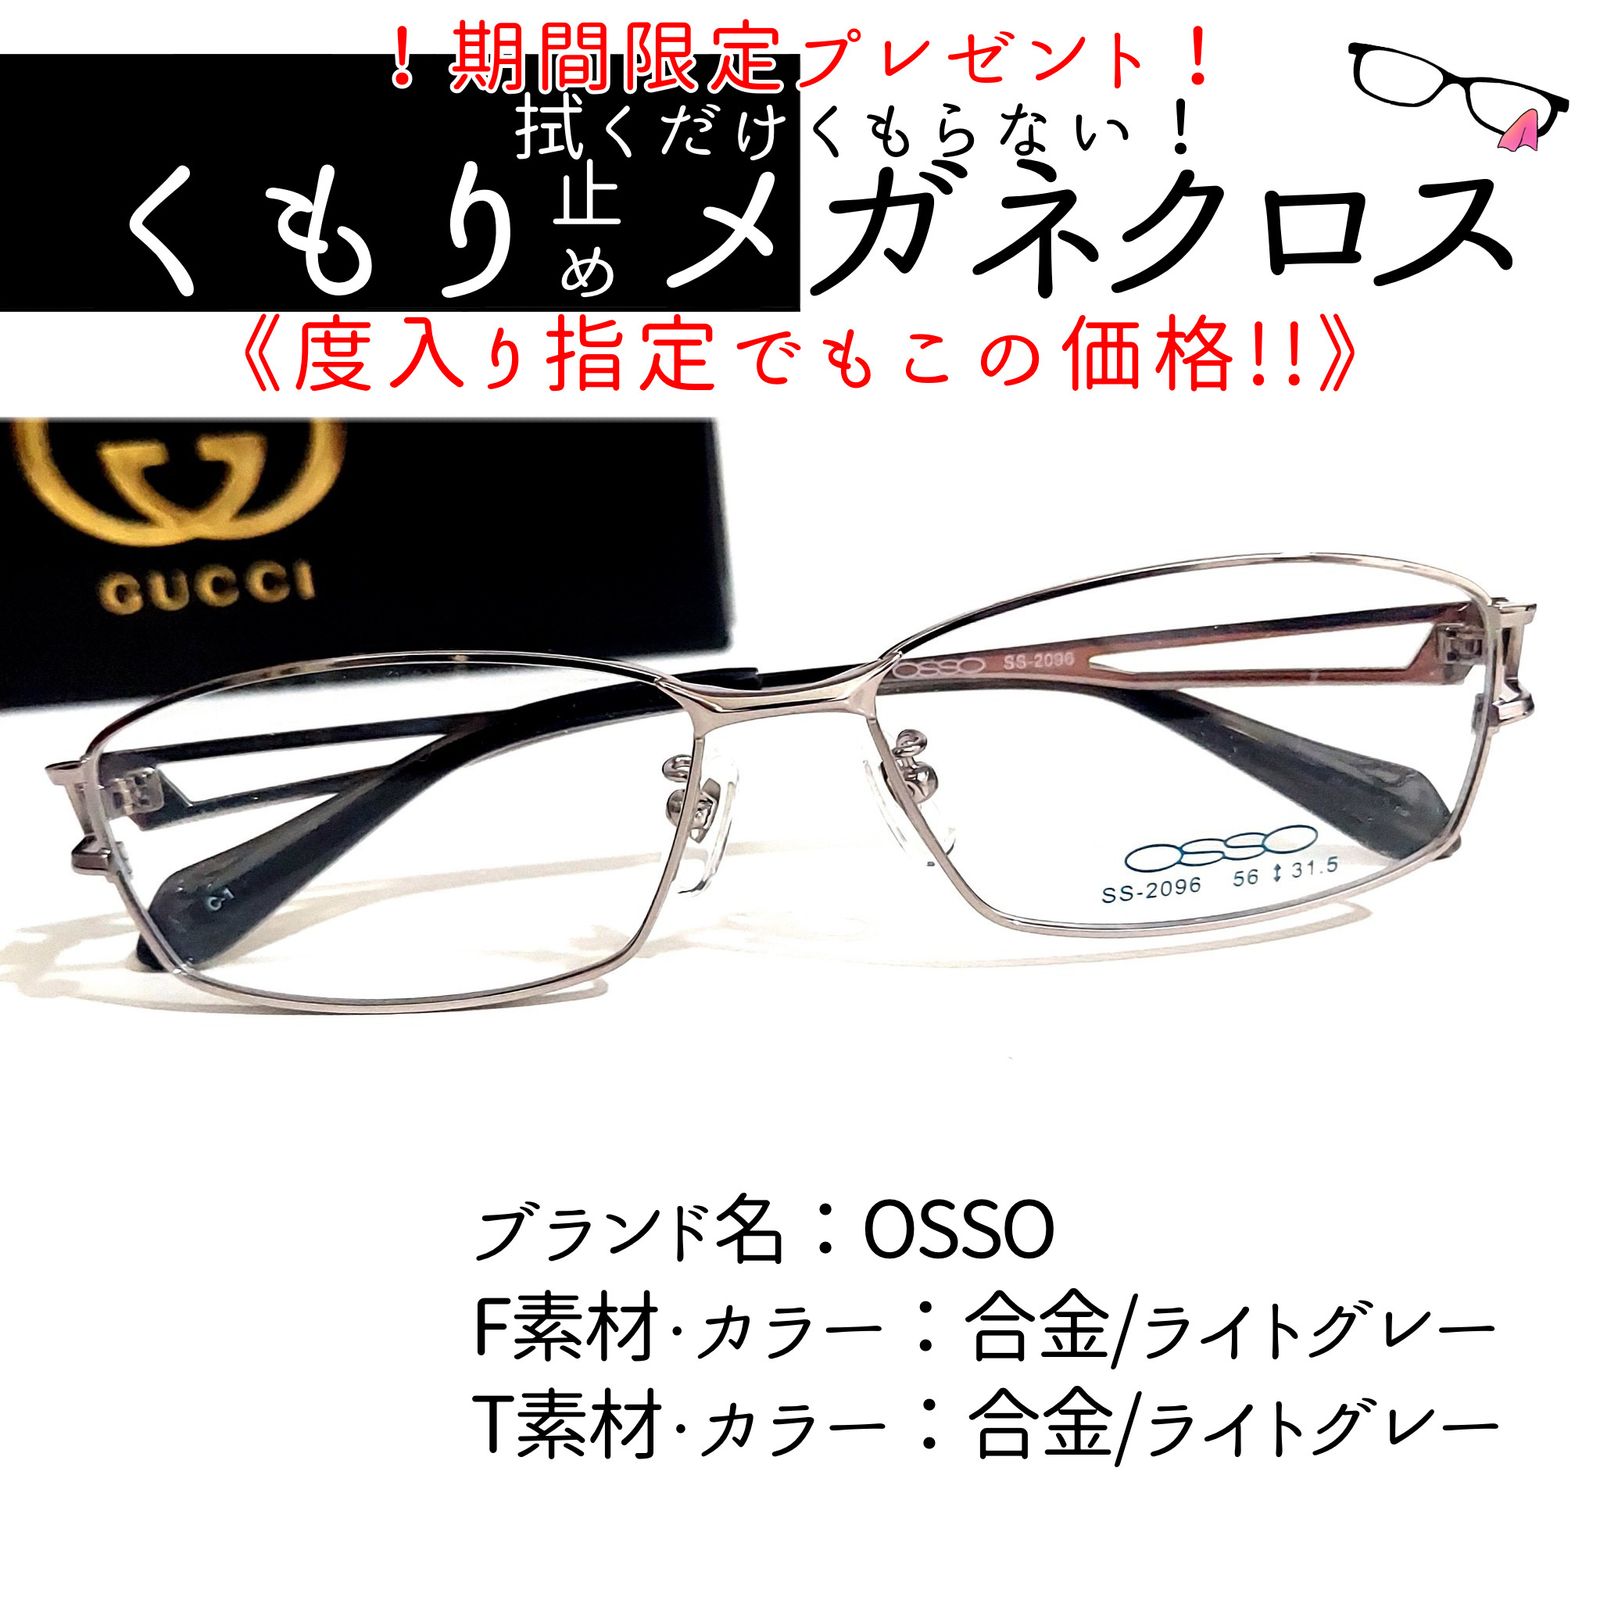 No.2115メガネ　OSSO【度数入り込み価格】